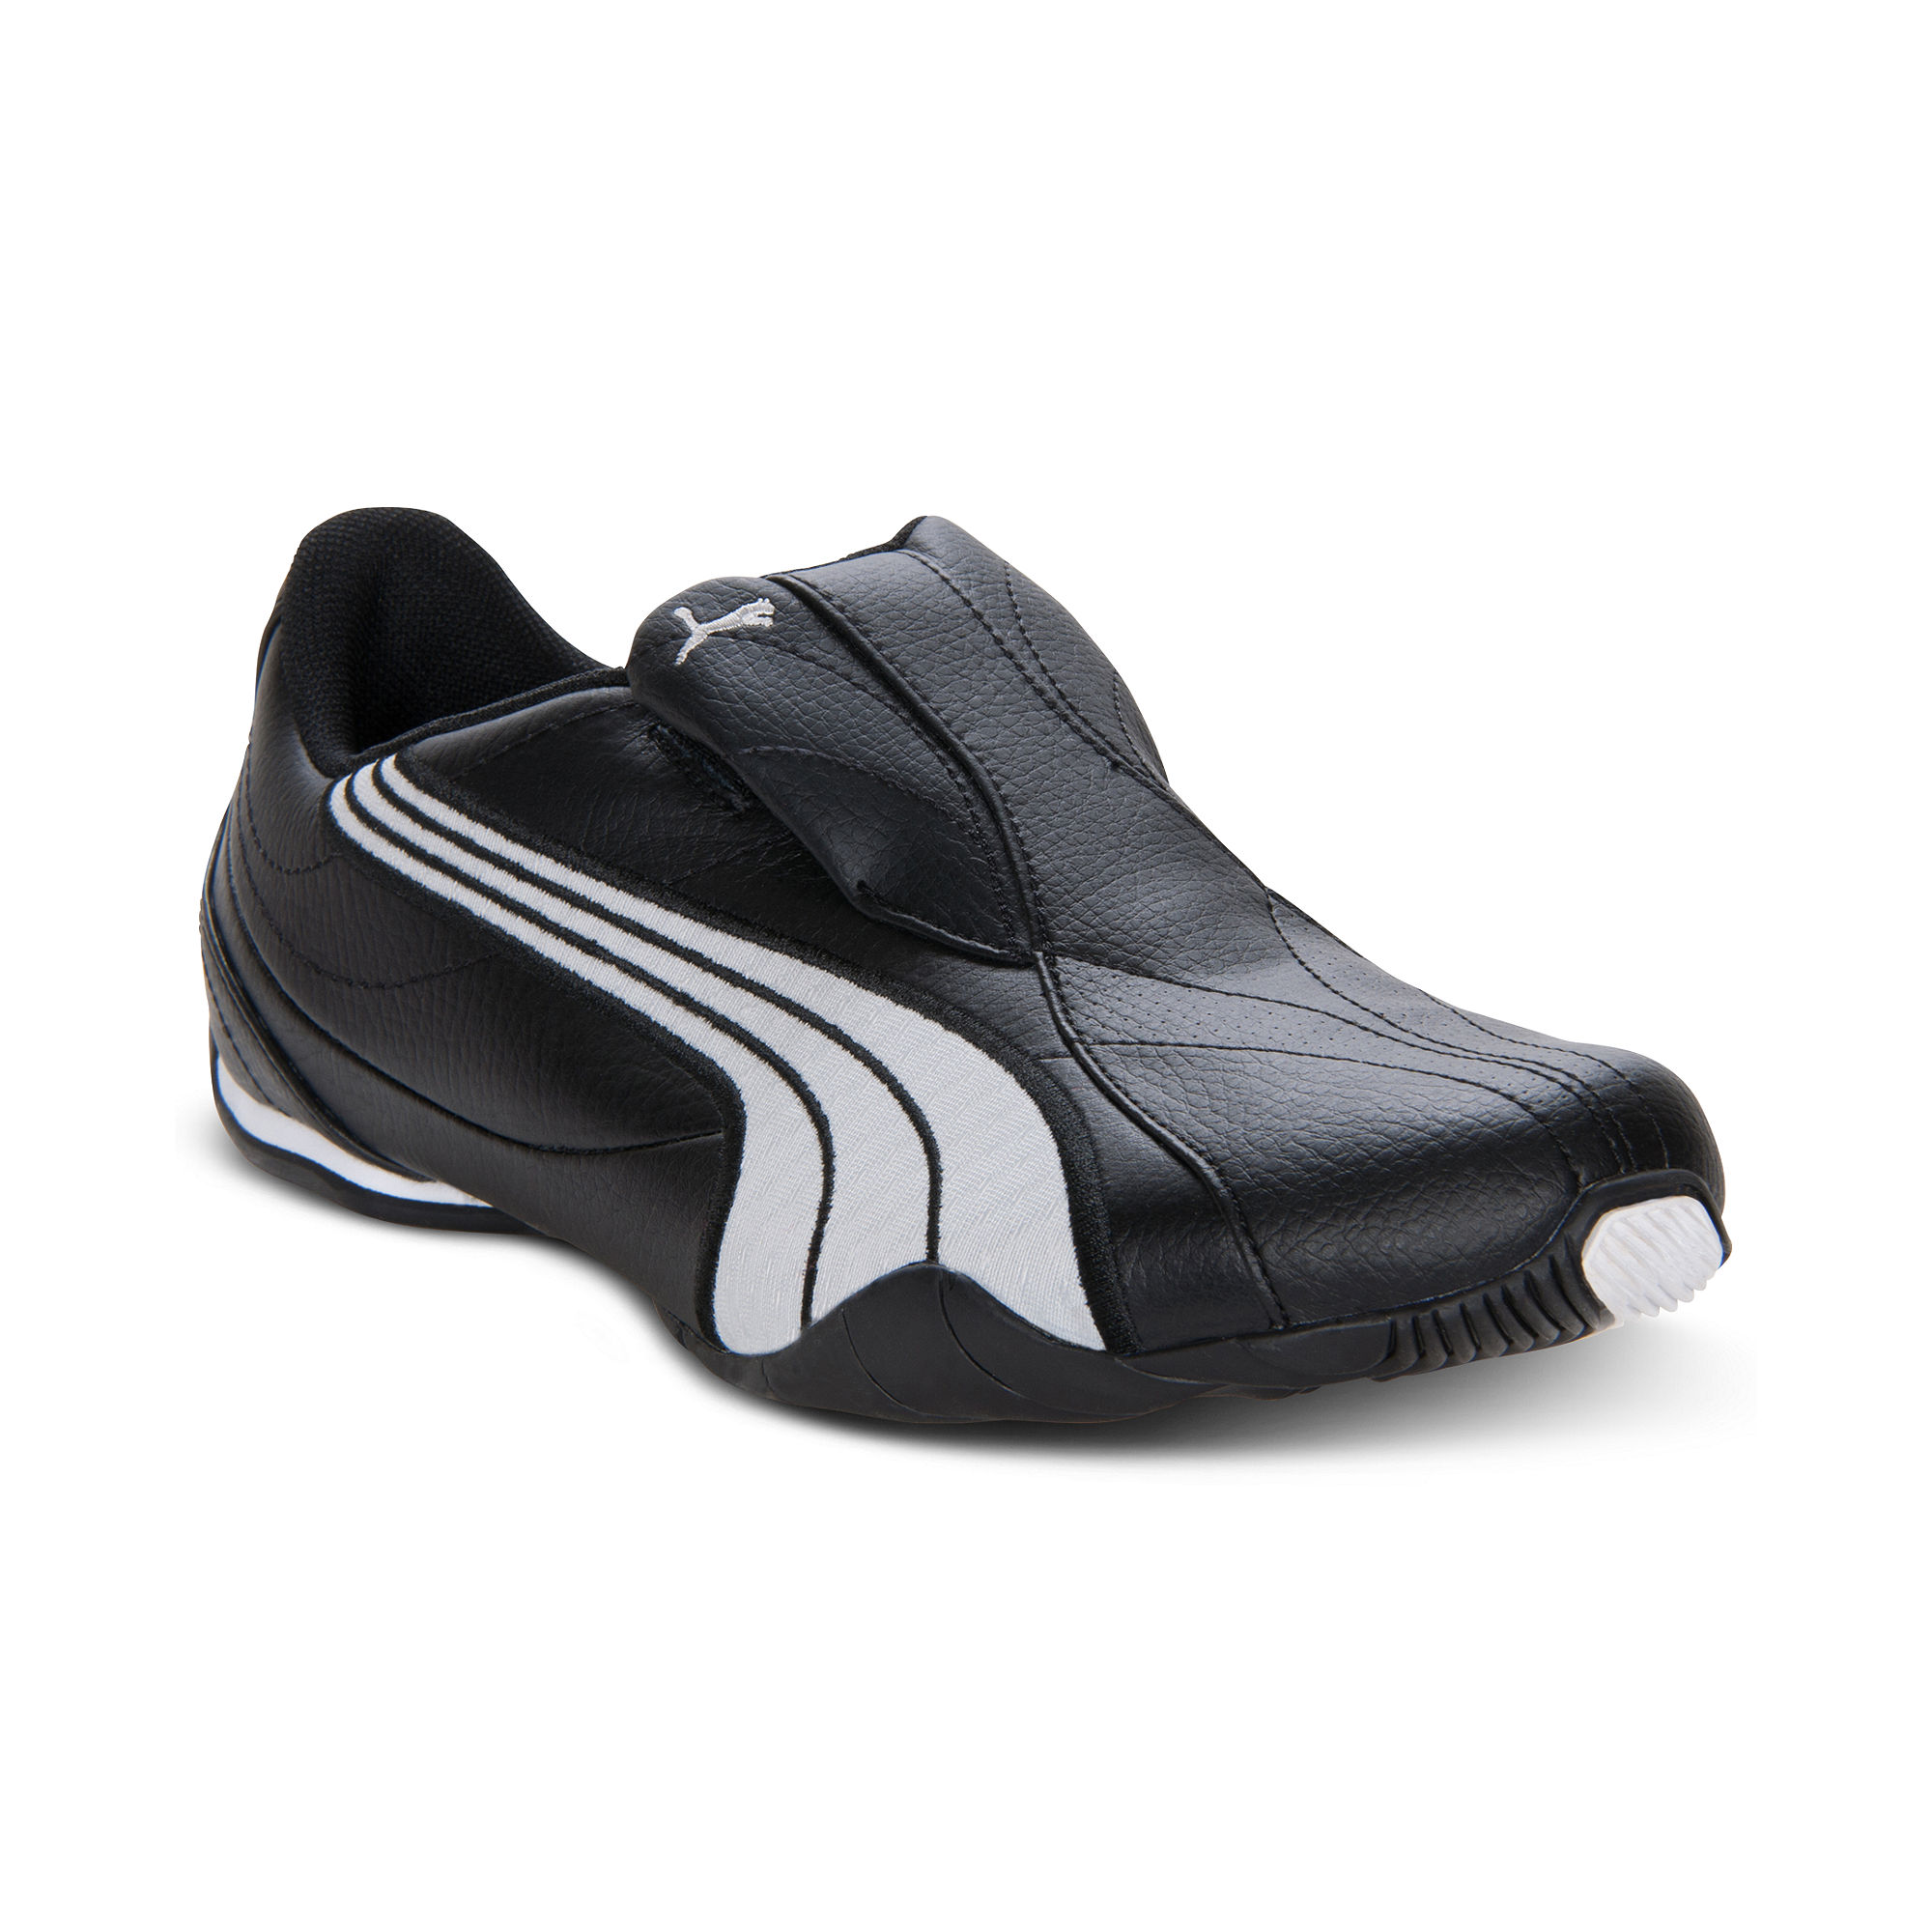 PUMA Tergament Sport Sneakers in Black/Grey/Violet (Black) for Men - Lyst